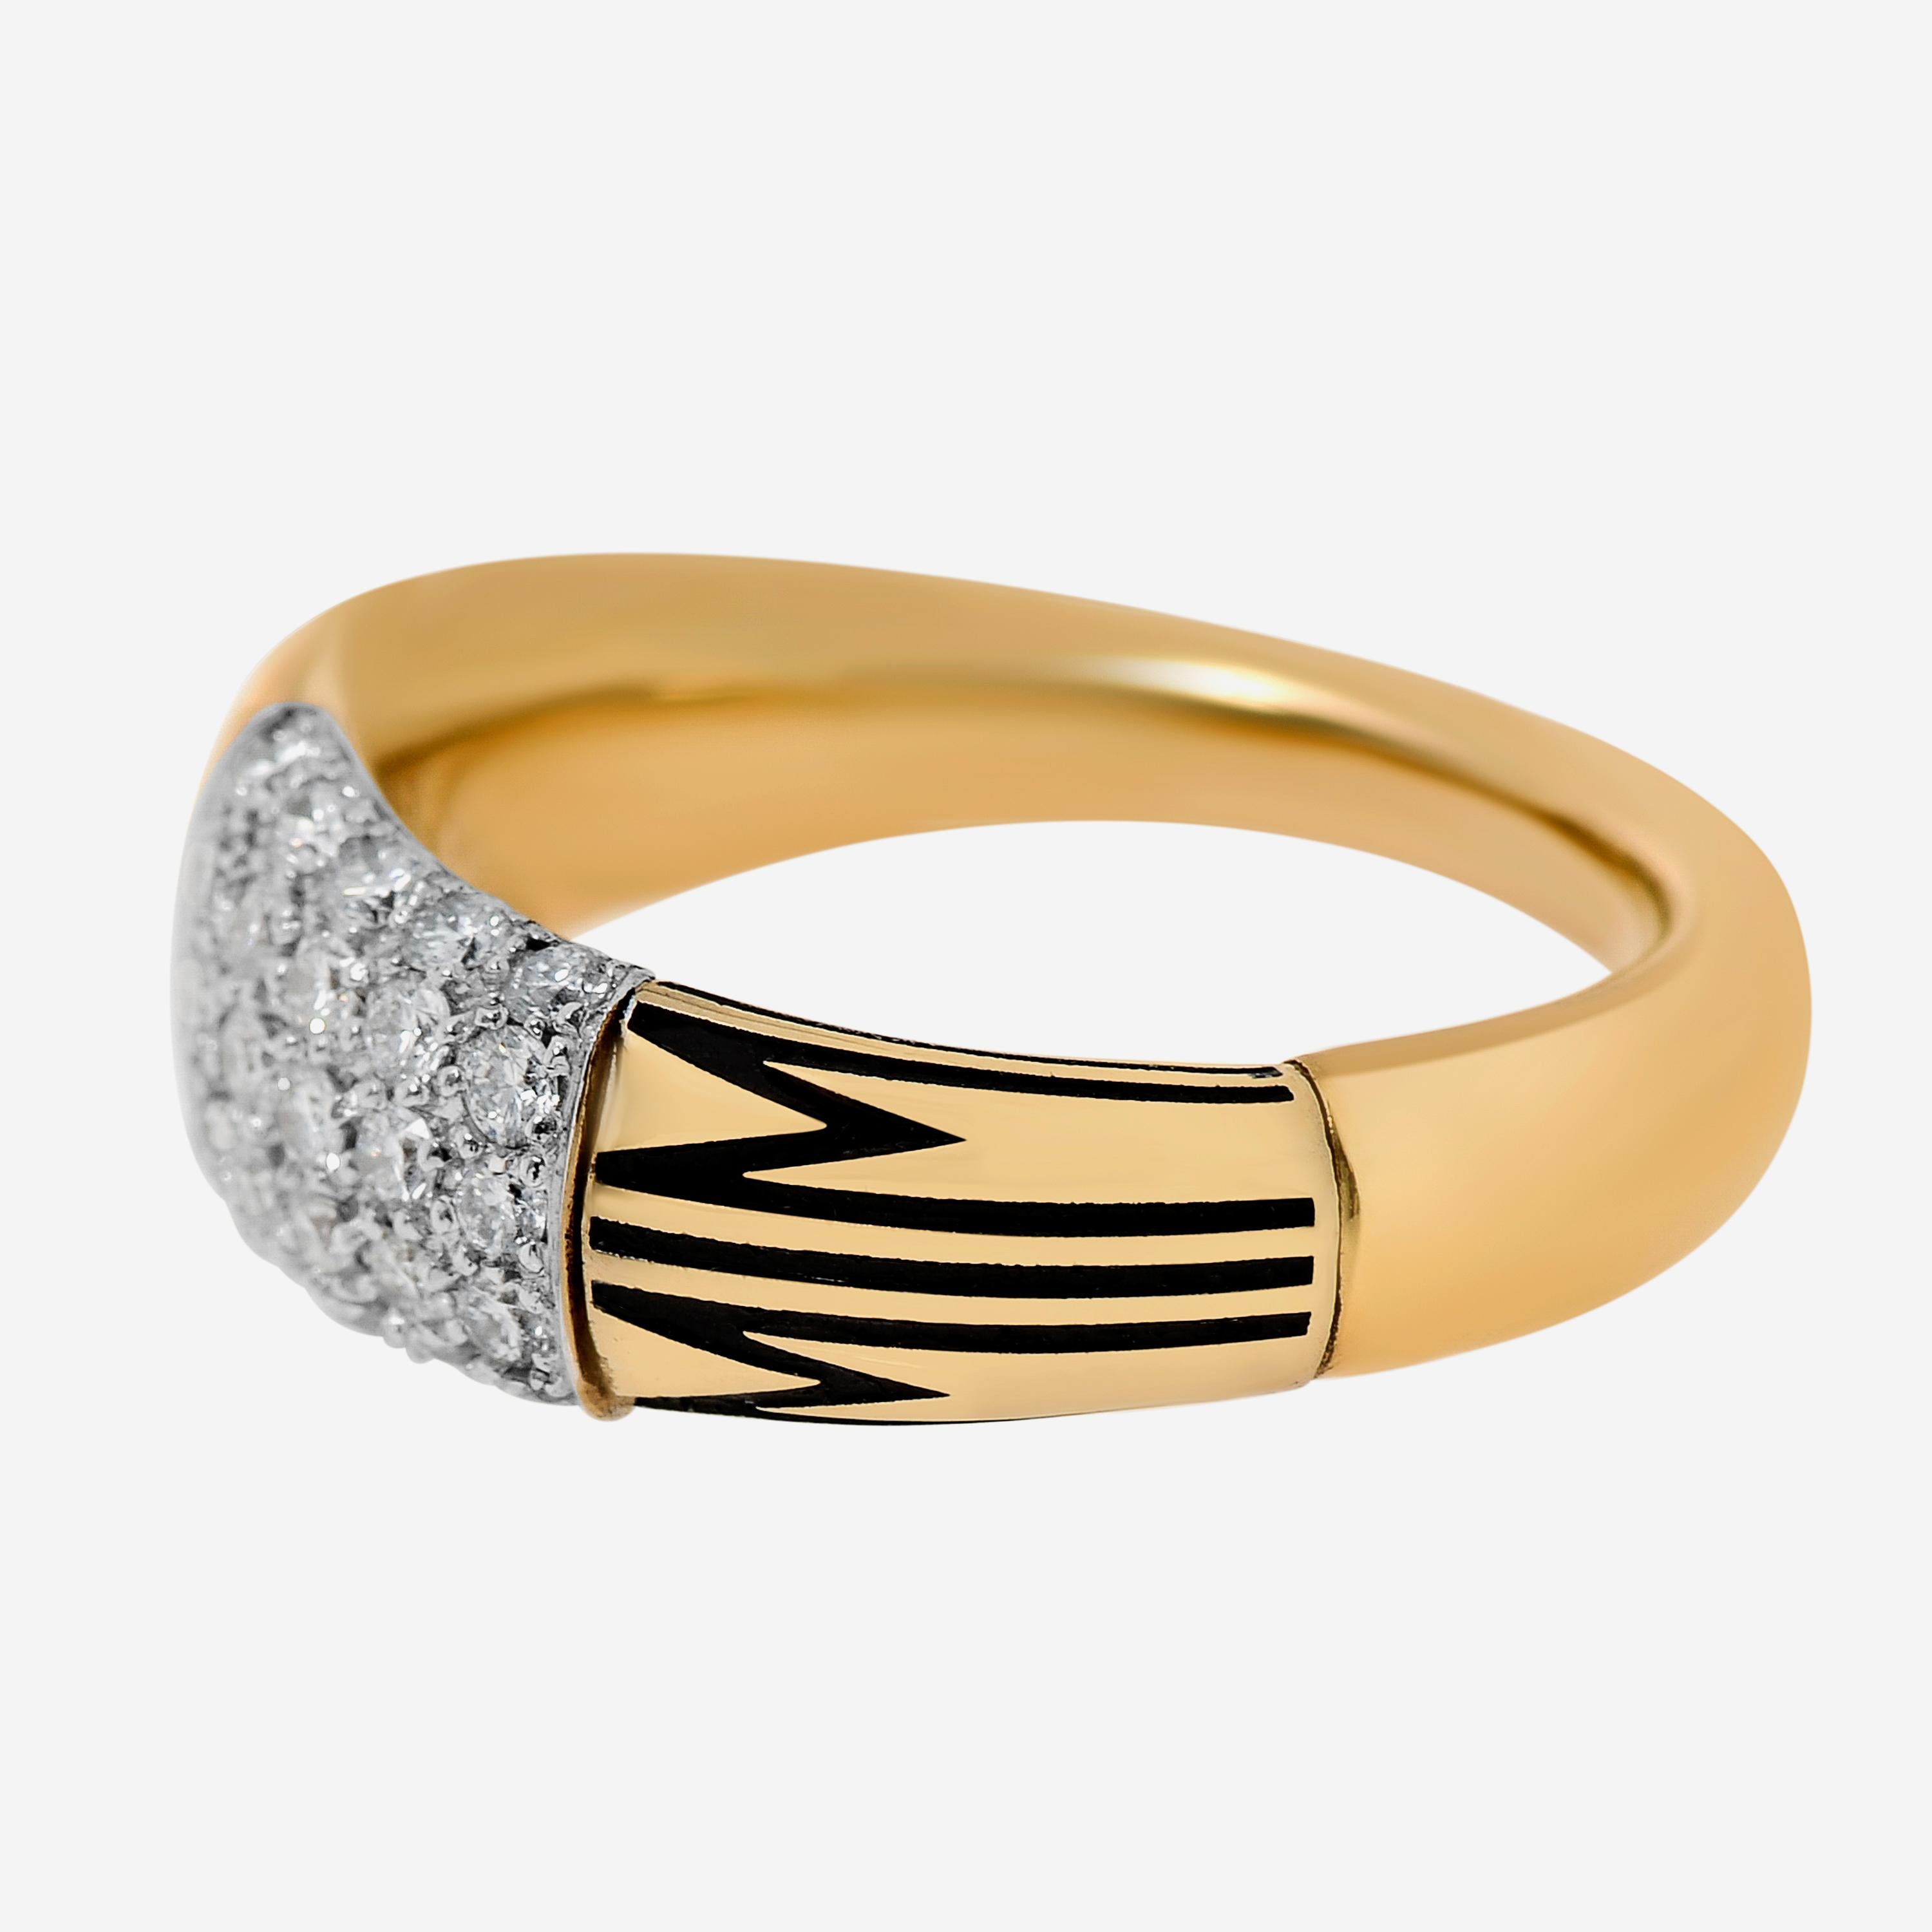 Contemporary Mimi Milano Tam Tam 18K Yellow & White Gold, Diamond Ring sz 6.75 For Sale